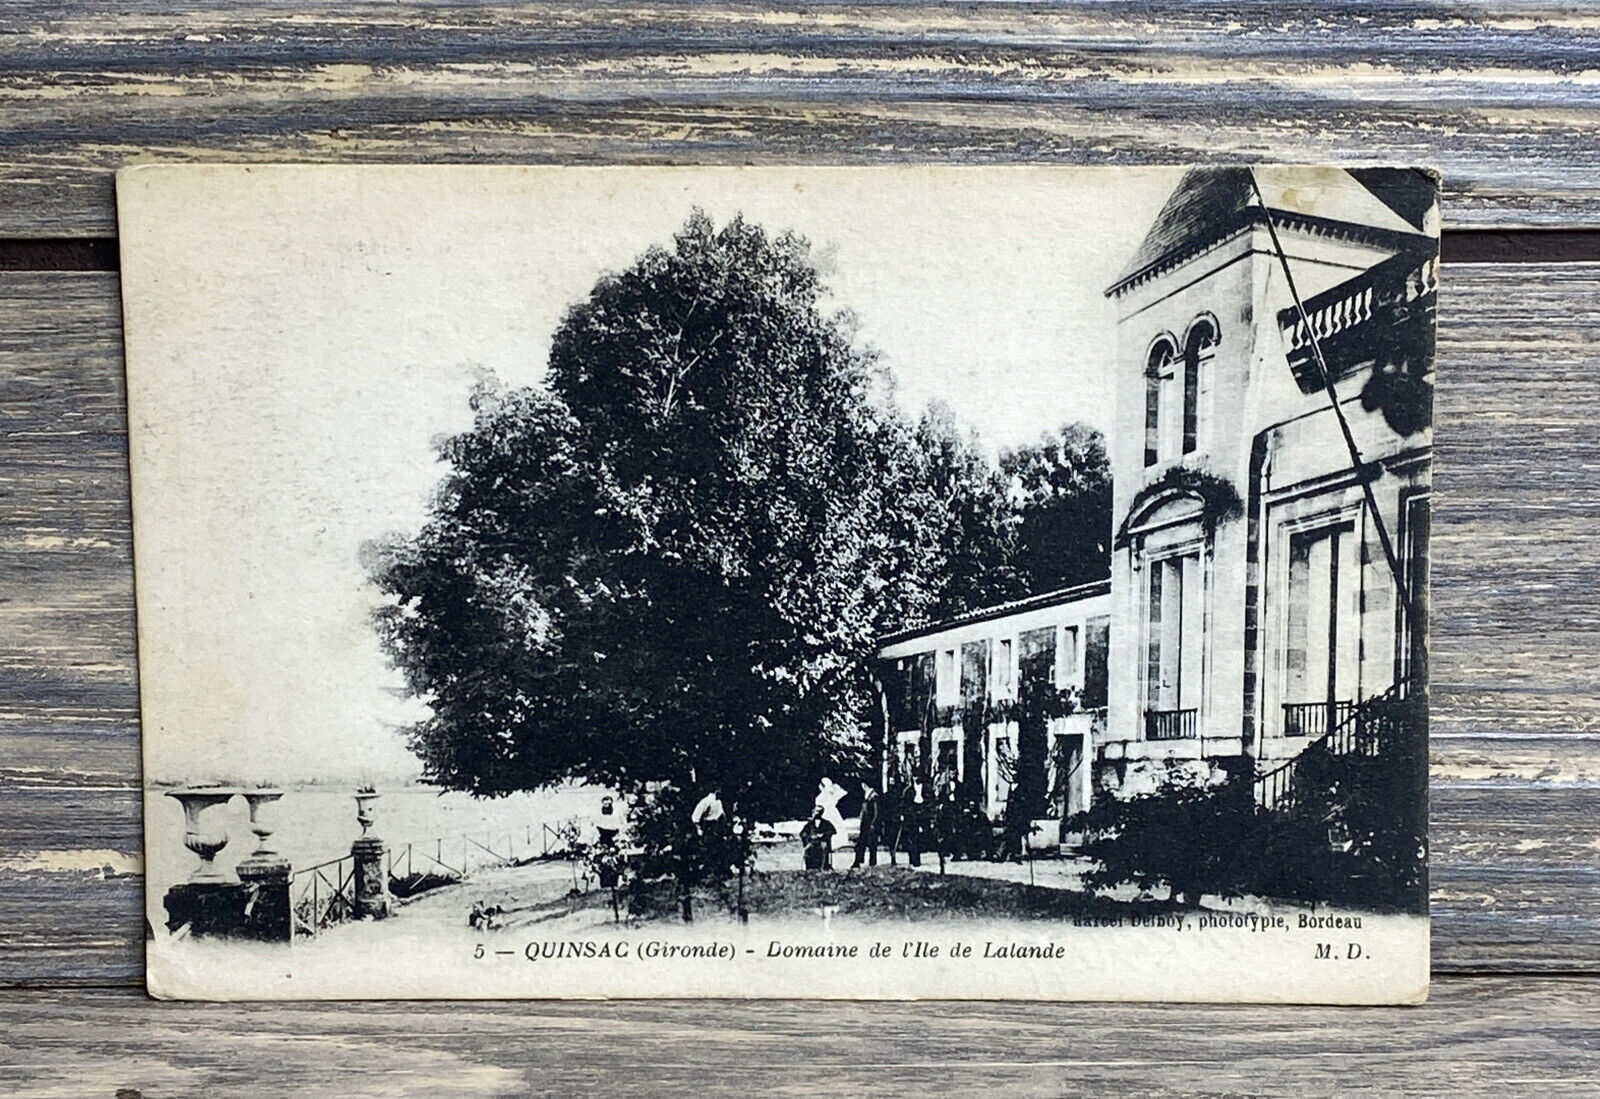 Vintage Postcard Domaine de l’Lle de Lalande France Postmark 1919 Black White